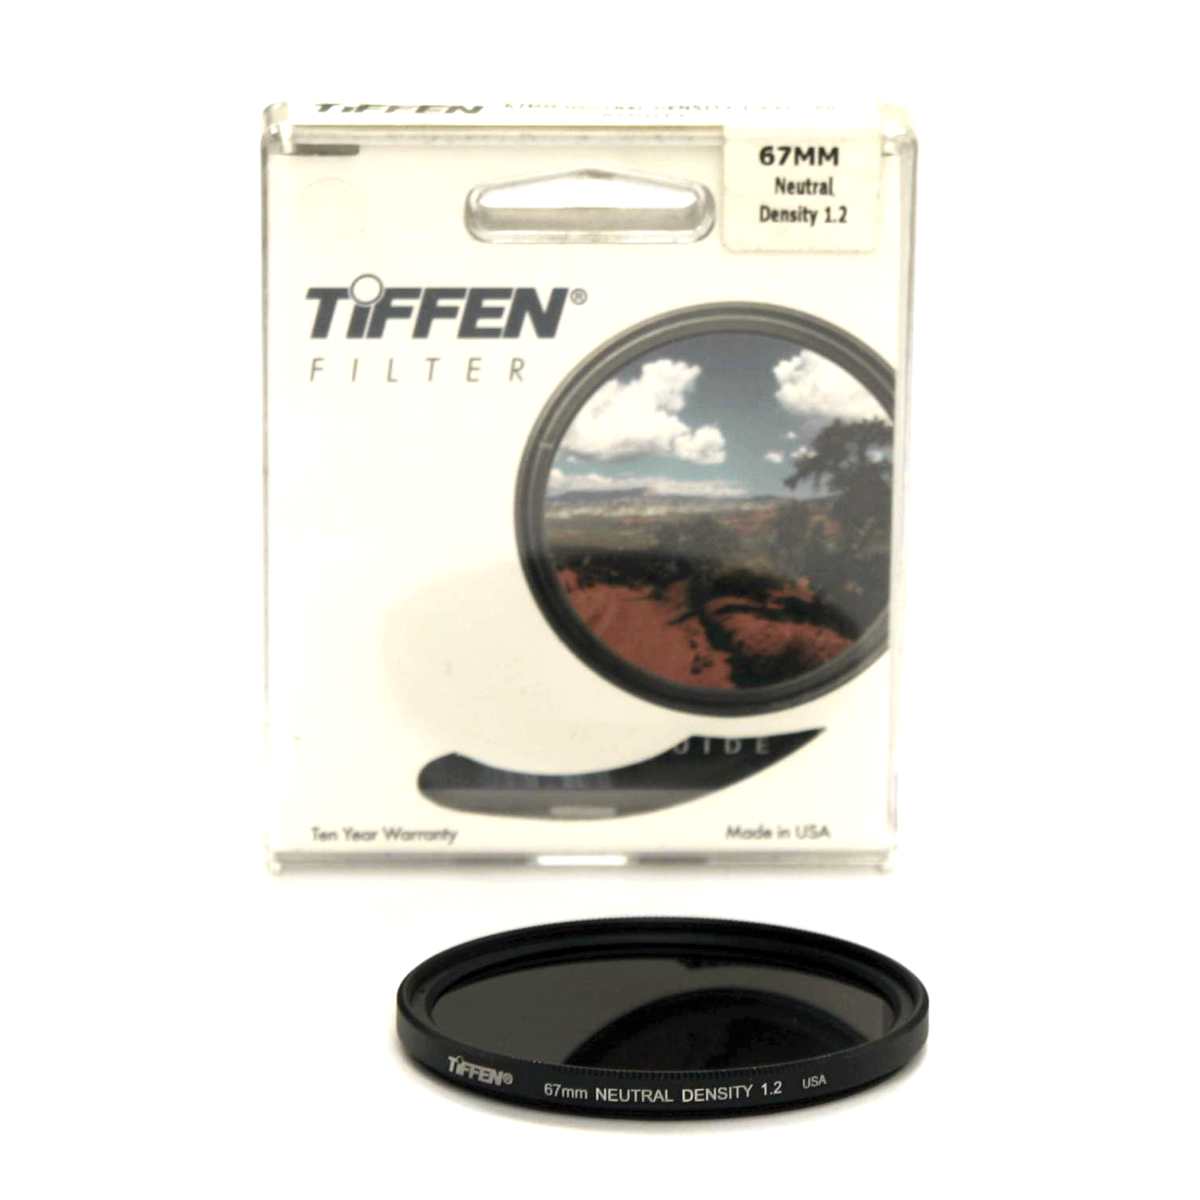 Tiffen 67MM NEUTRAL DENSITY 1.2 (4 Stop) Filter